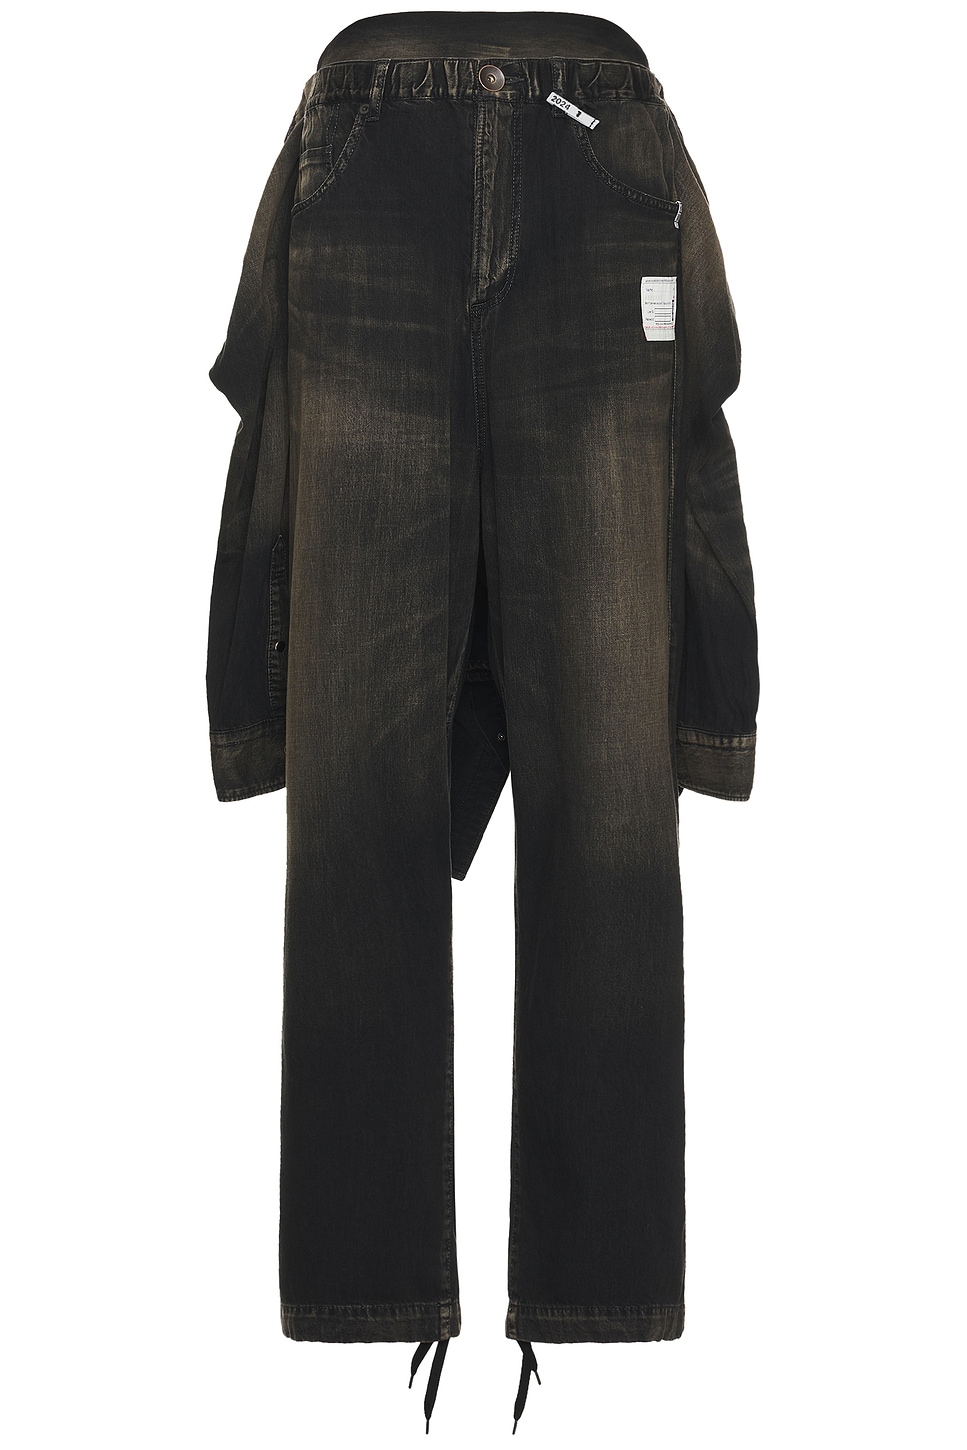 Image 1 of Maison MIHARA YASUHIRO Shirts Combination Denim Pants in Black